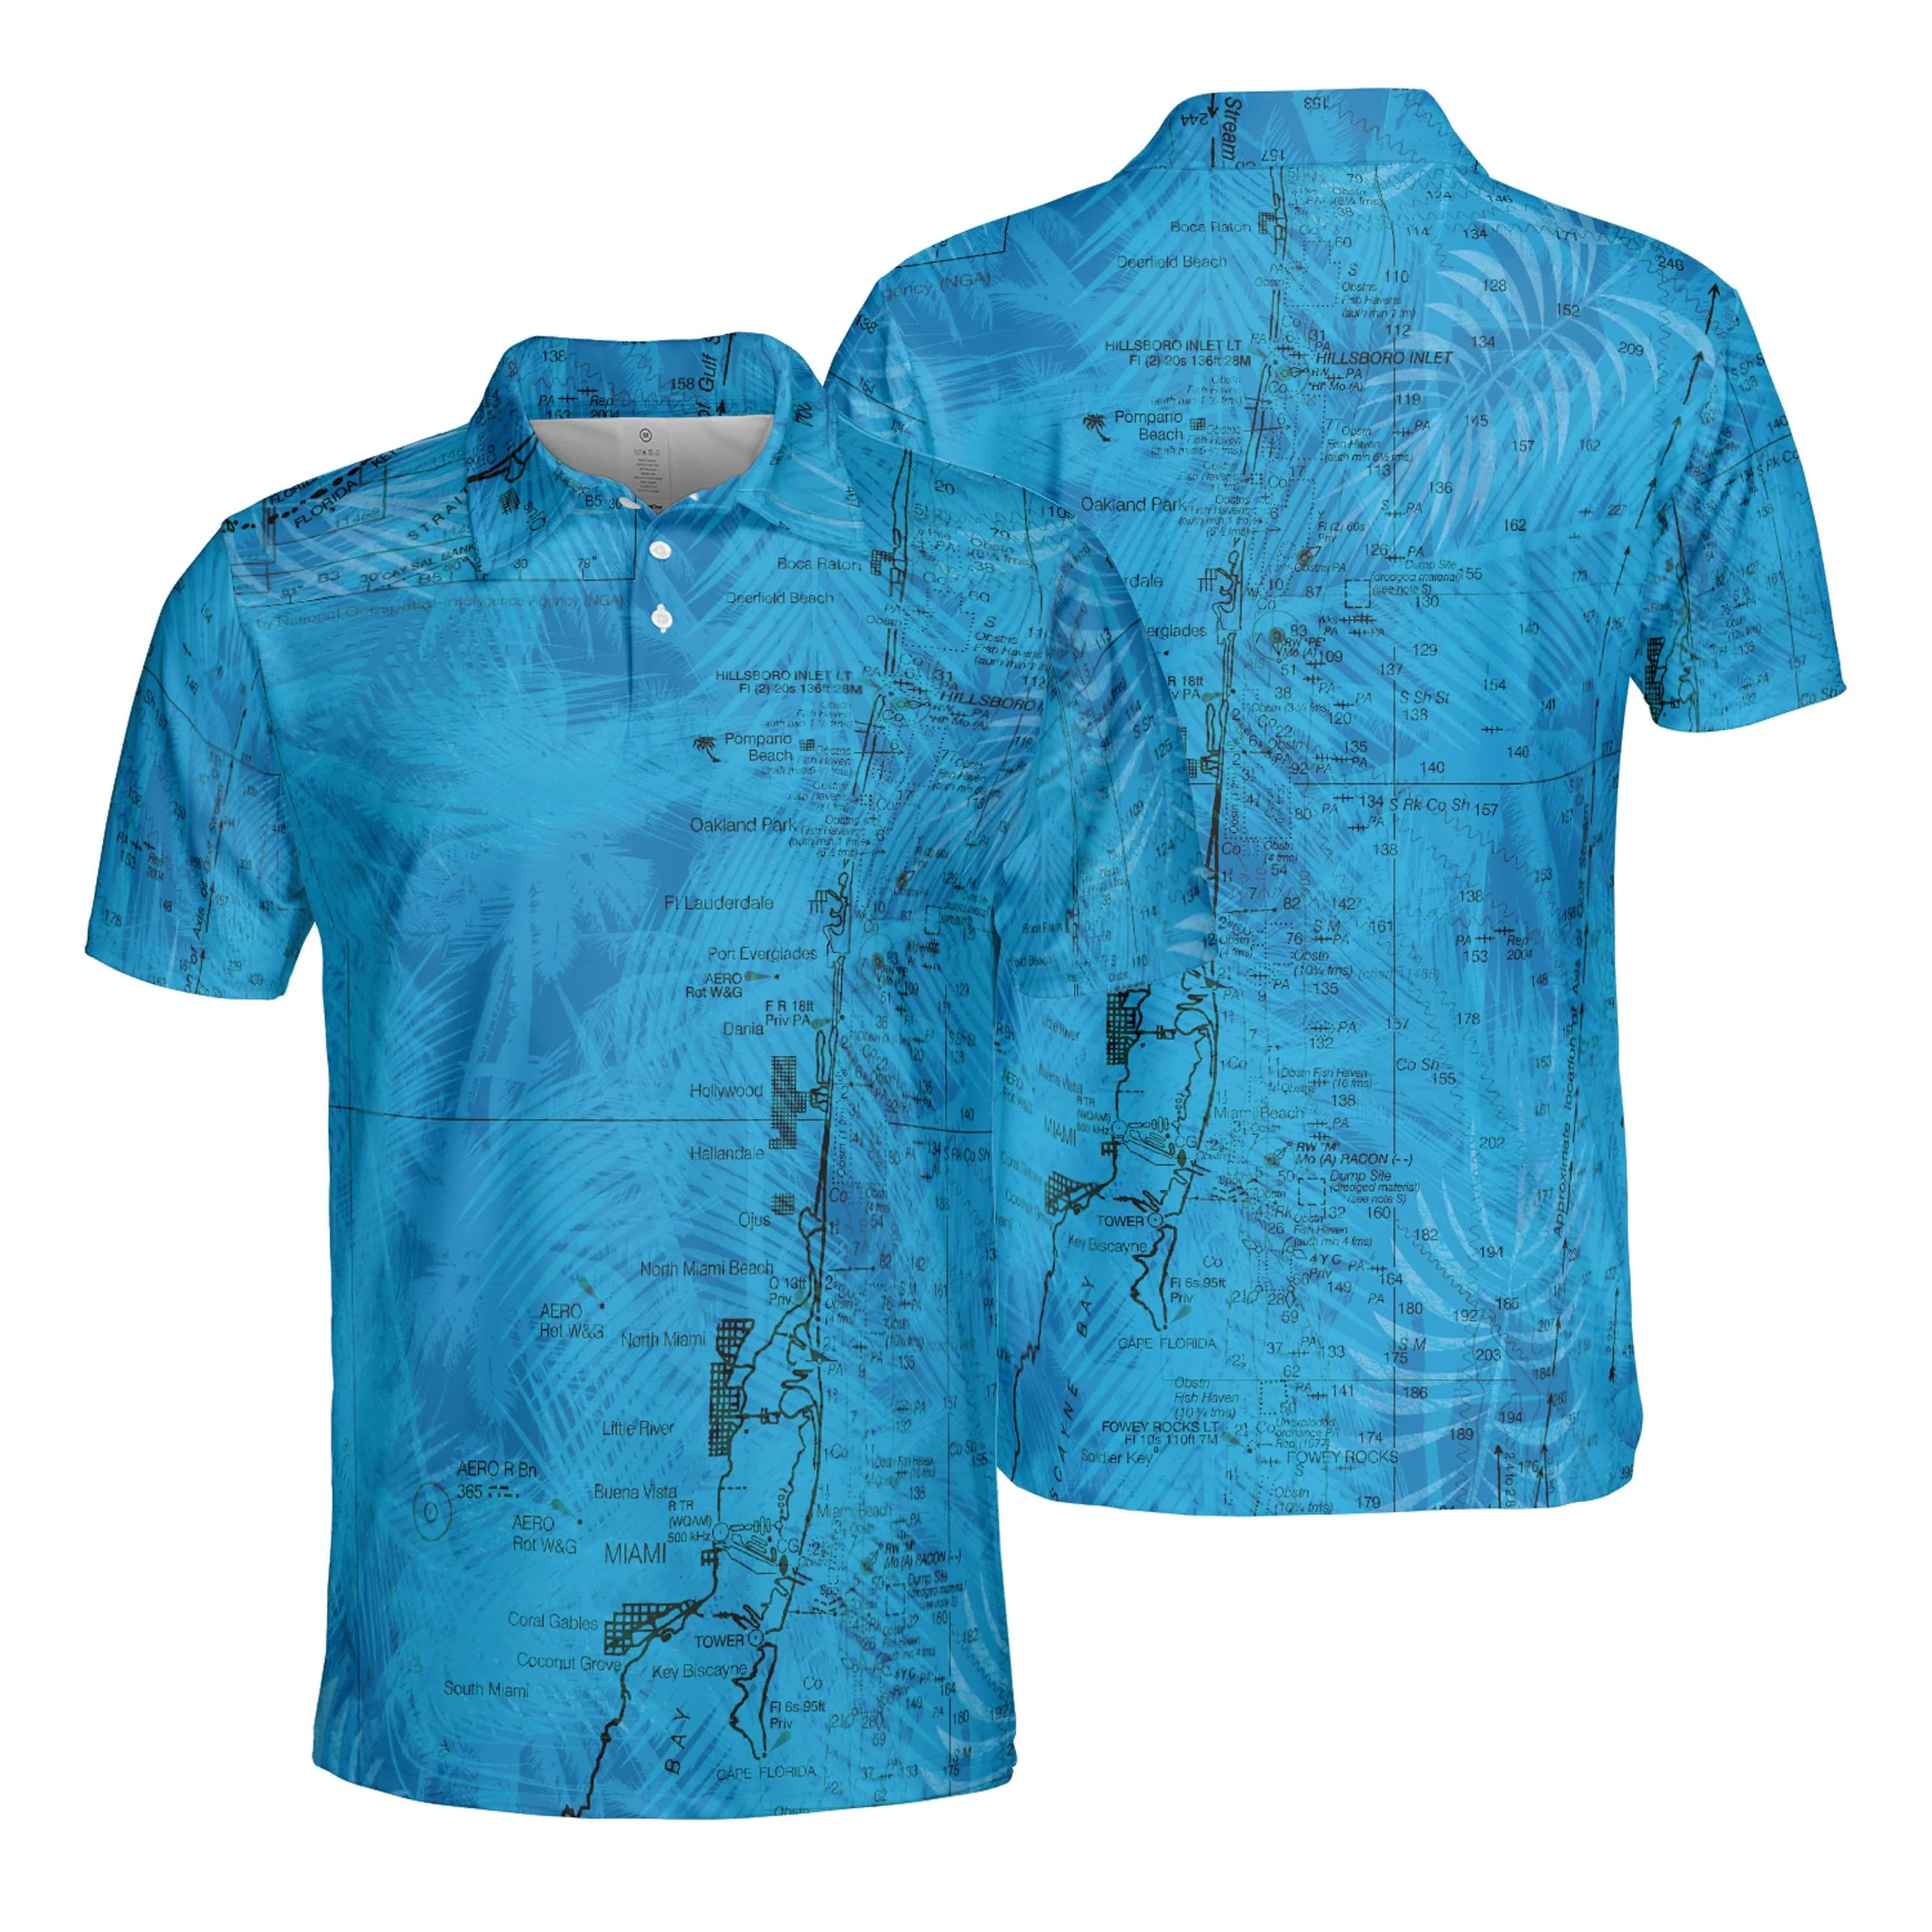 The Pompano Beach Blue Palms Polo Shirt